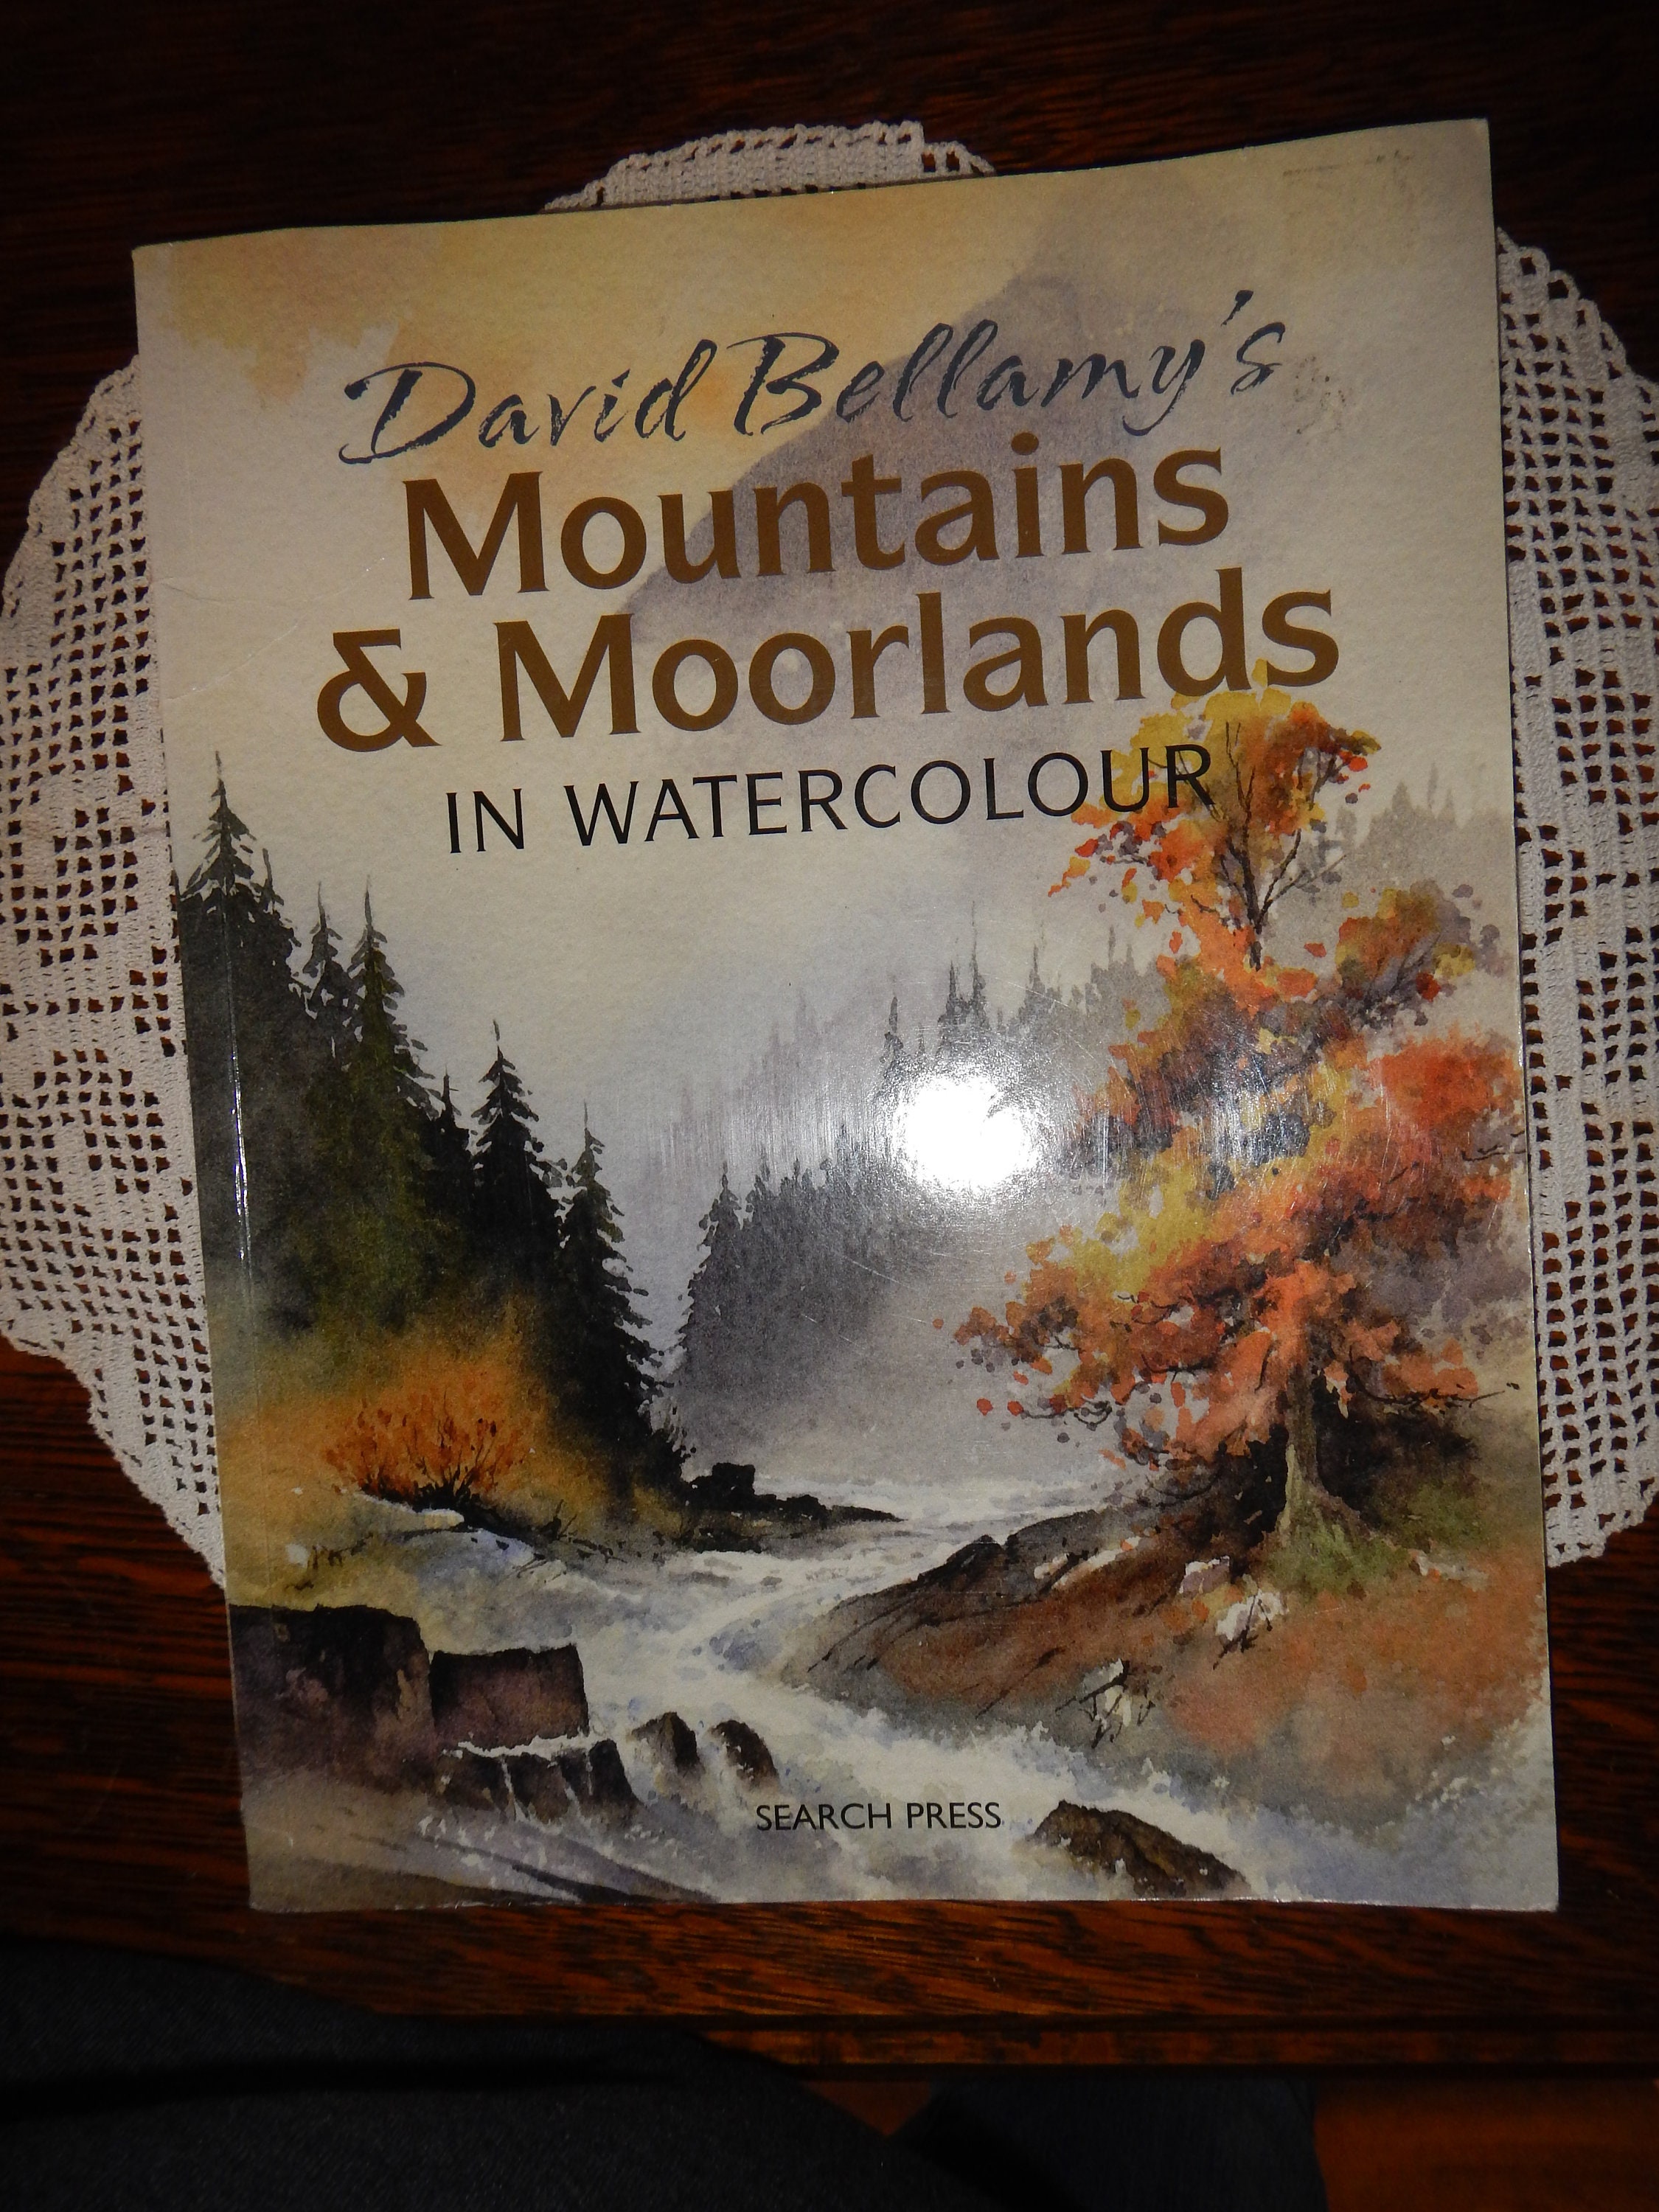 David Bellamys Complete Guide To Watercolor : Book By David Bellamy  Paperback